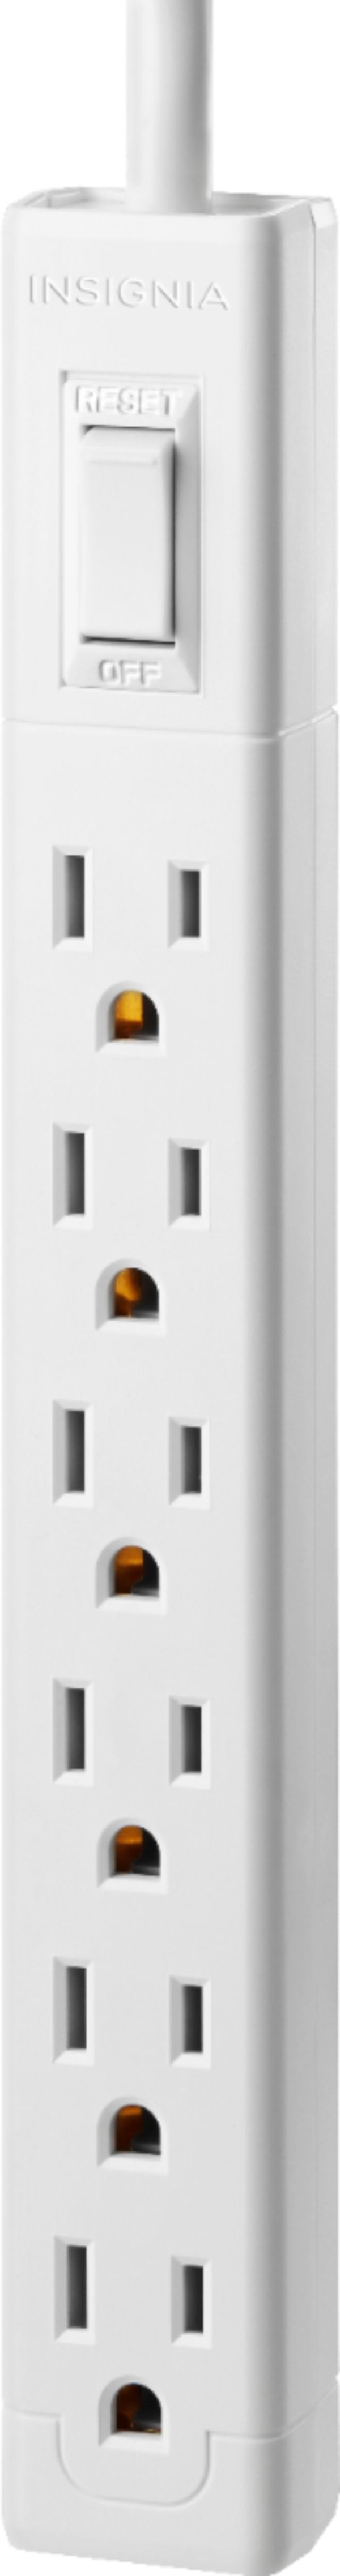 ™ - 6-Outlet Power Strip - White